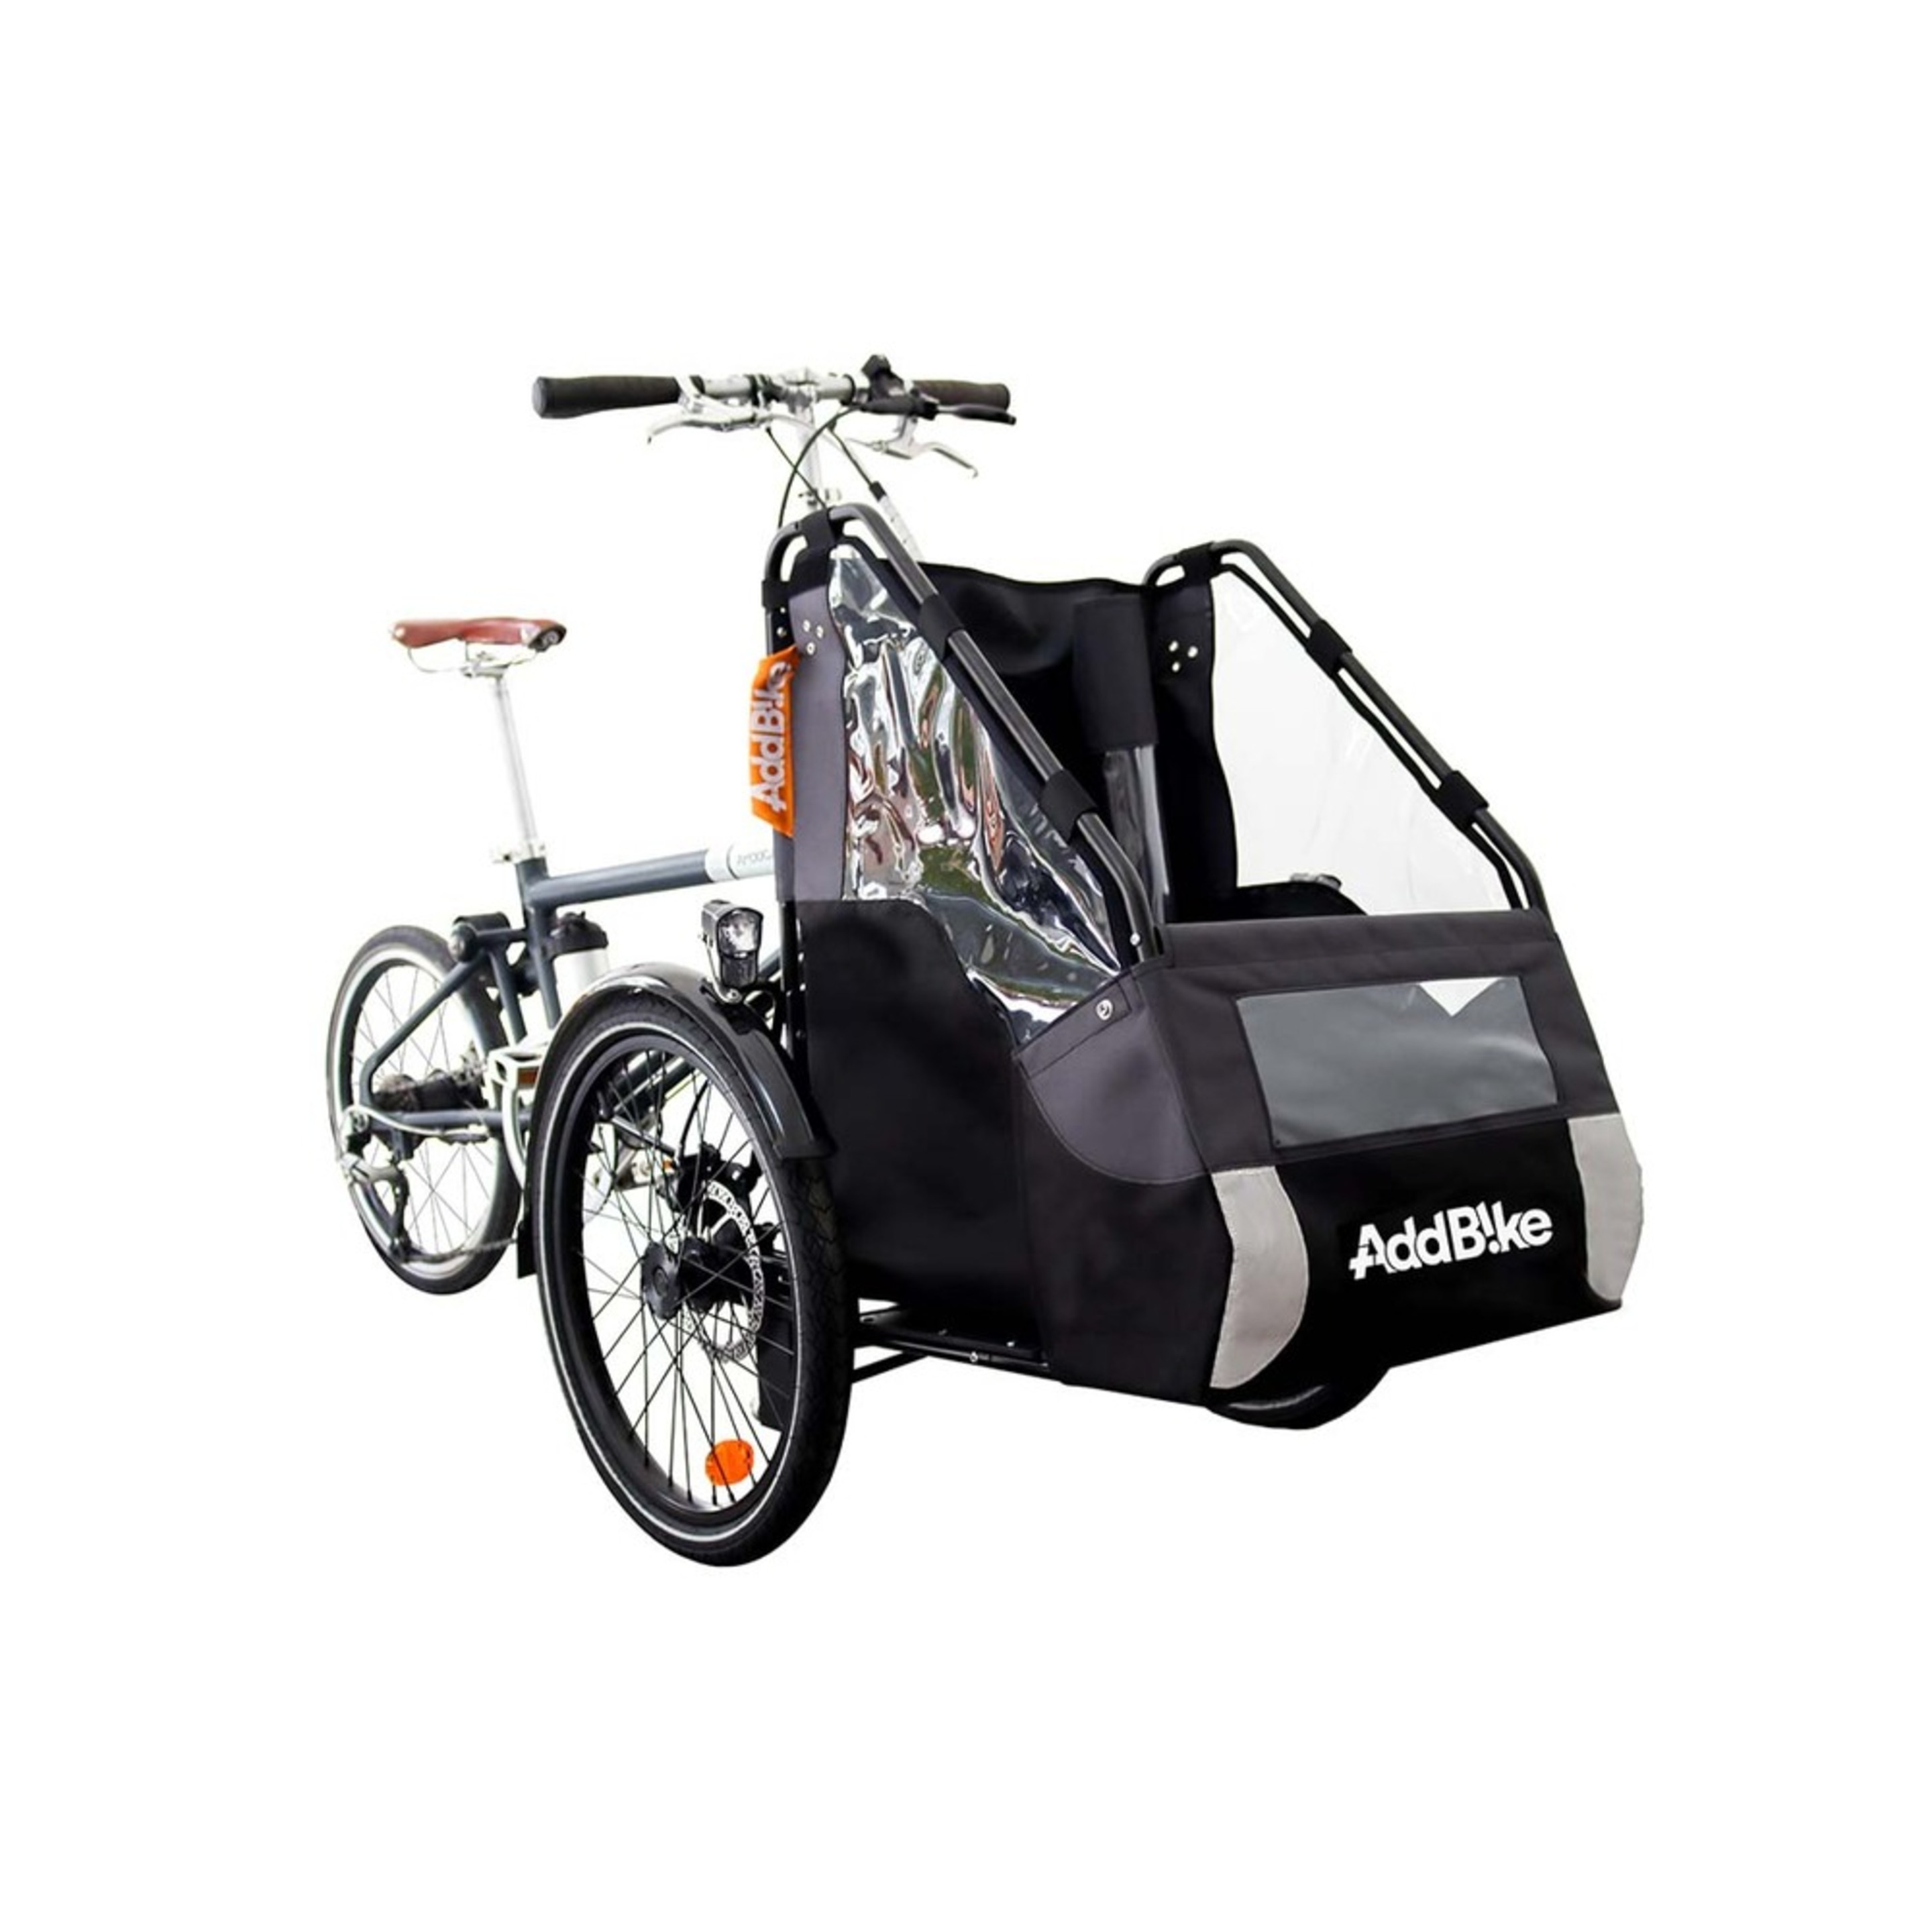 Kit Delantero Addbike Transporte Perro - Gris/Negro - Kit Delantero: Transporte Perro  MKP